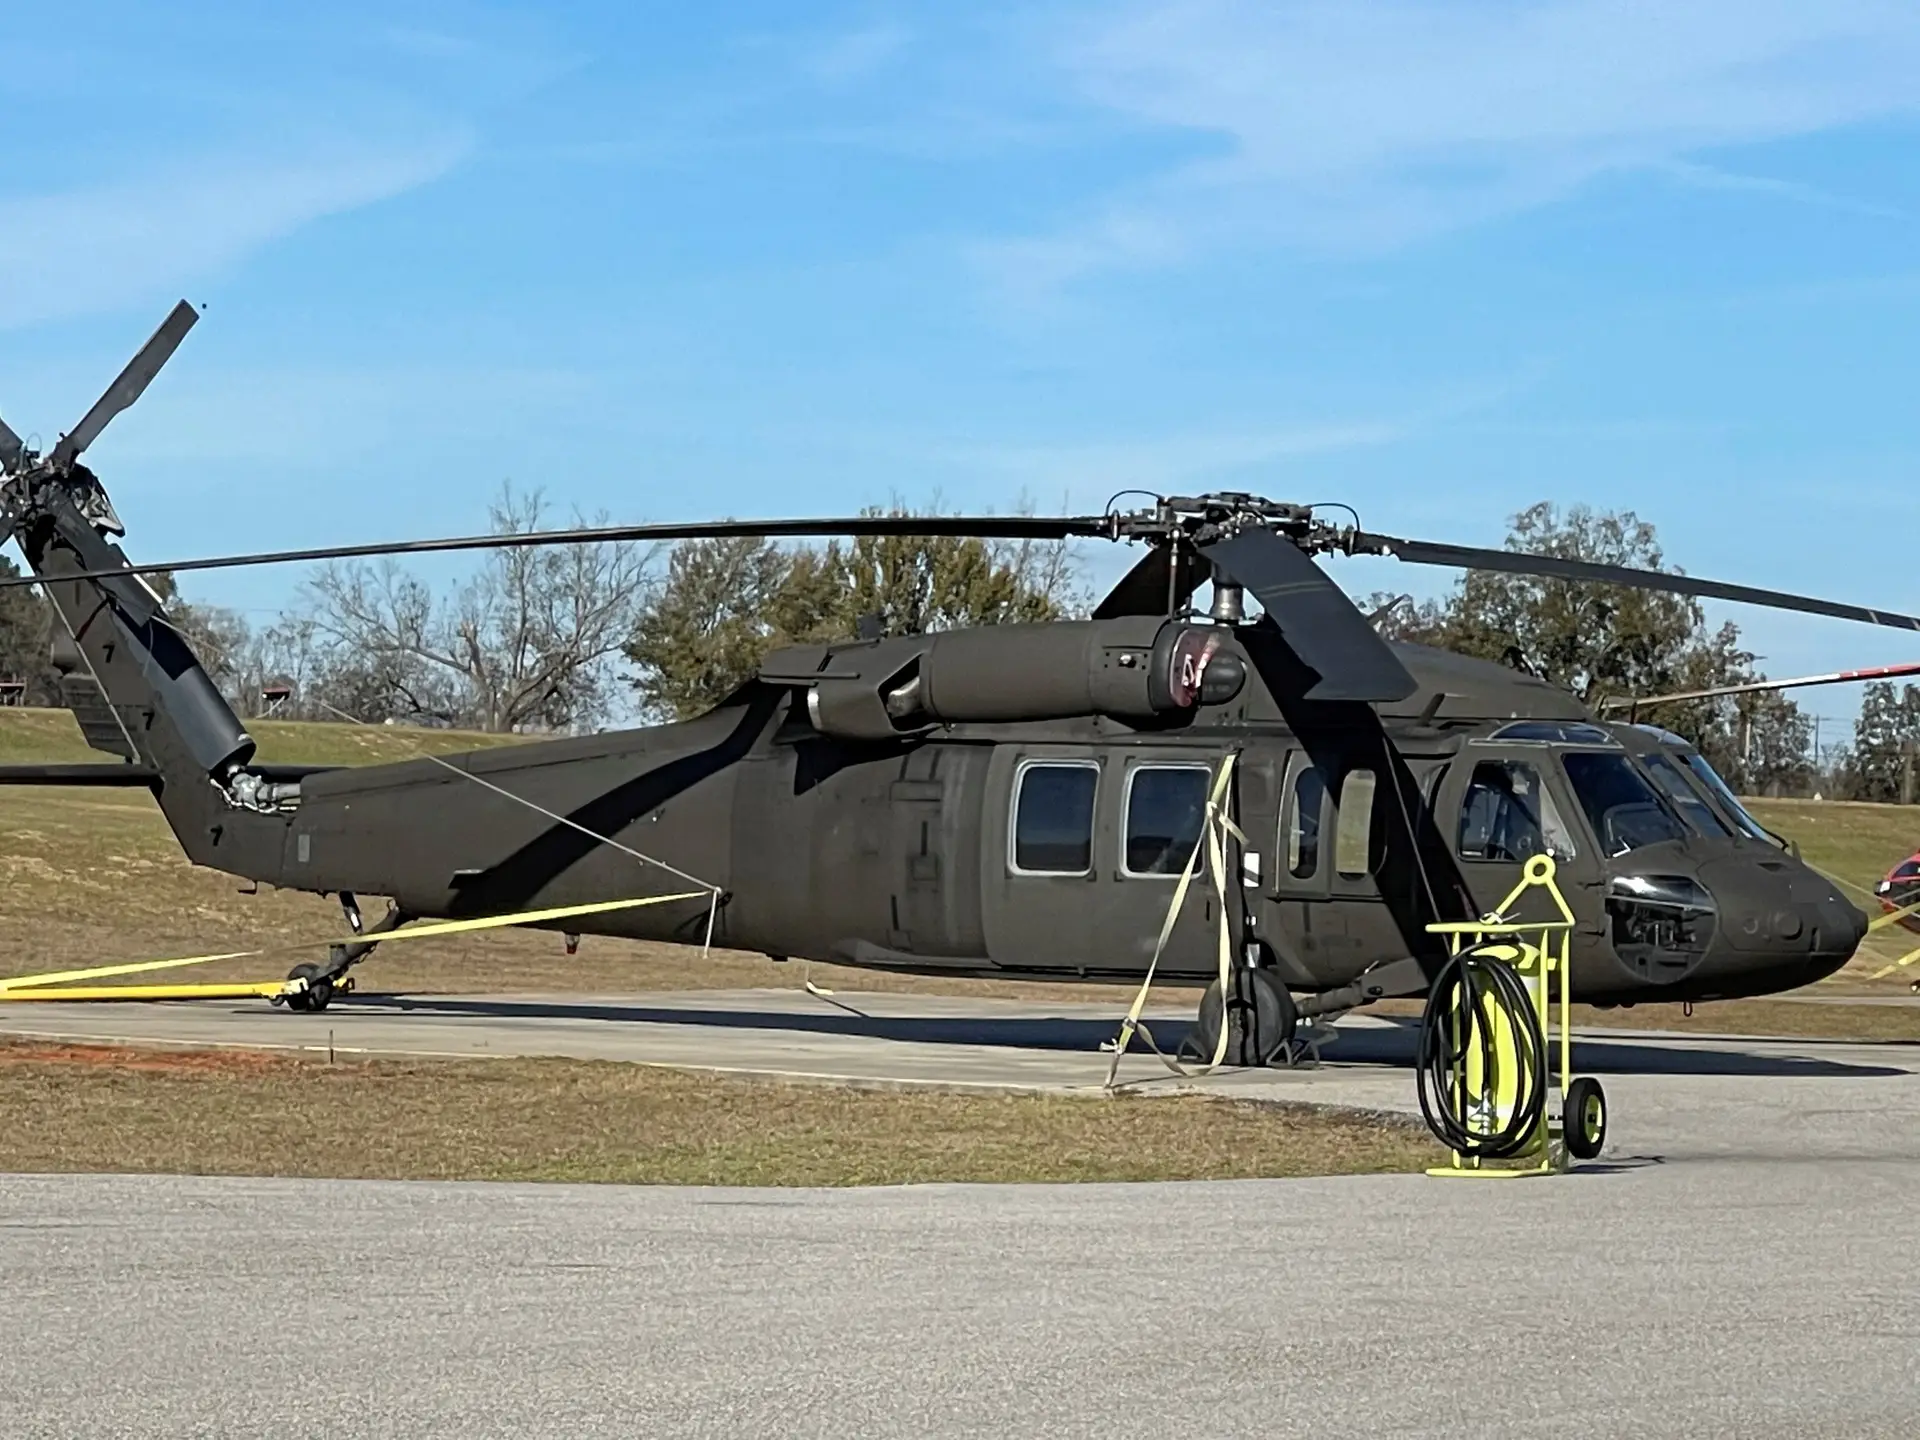 Helicóptero norte-americano Black Hawk comprado pela Força Aérea para o dispositivo de combate a fogos